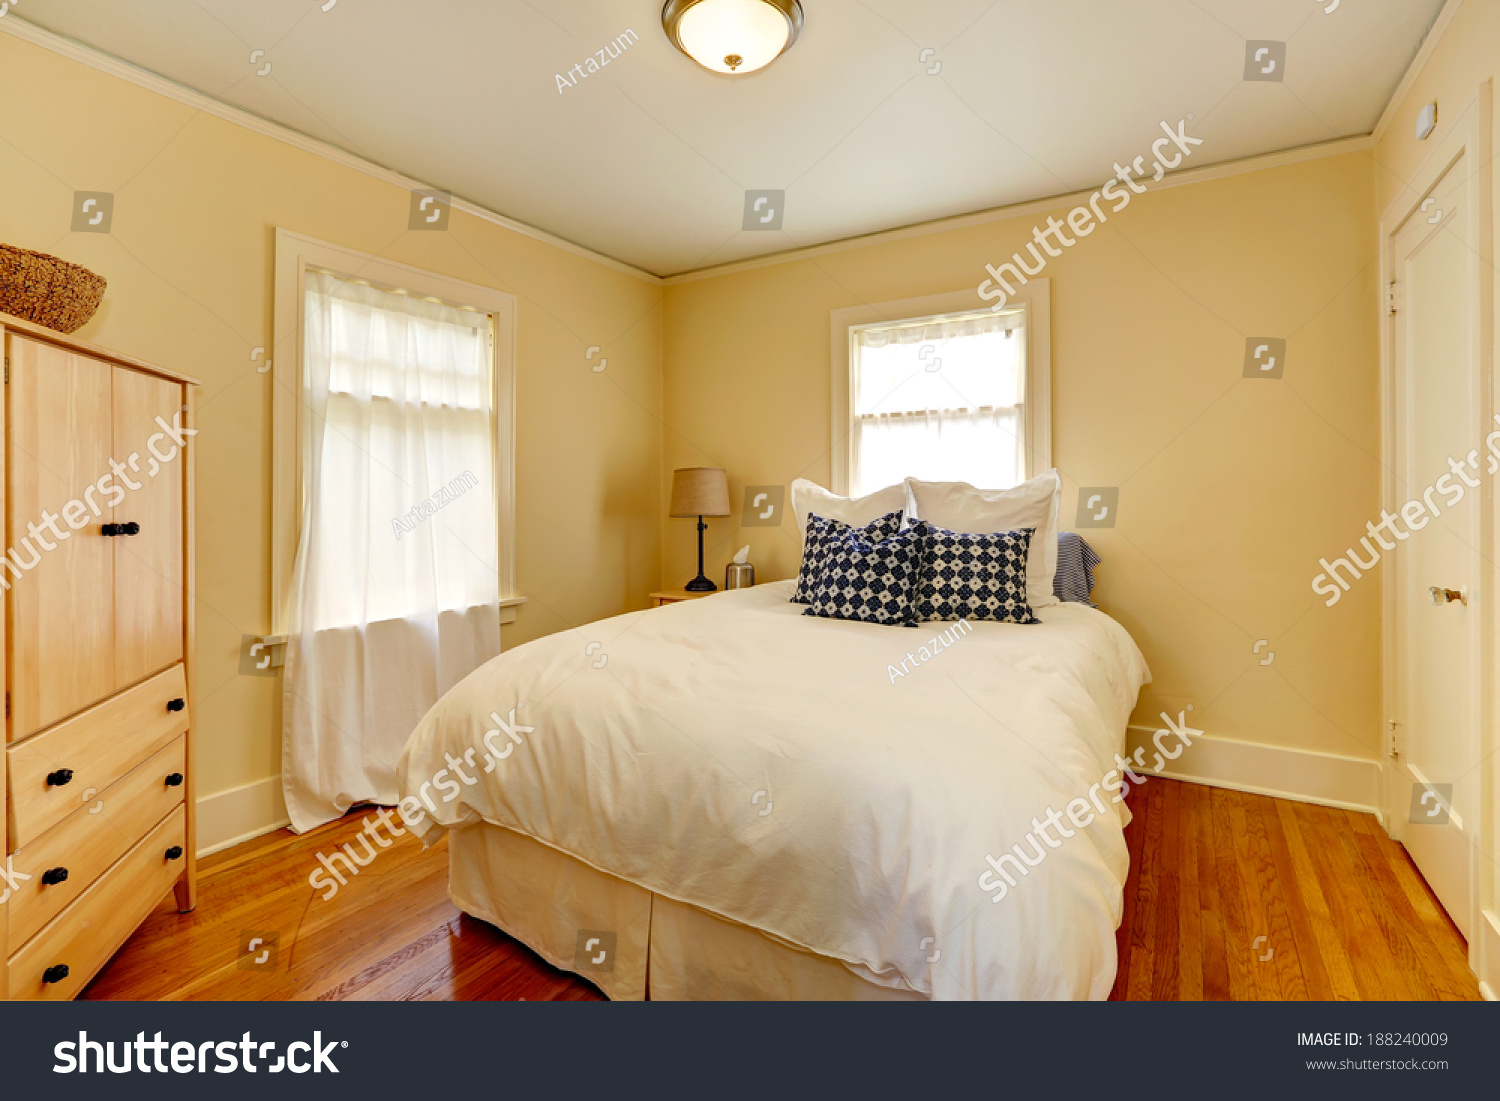 Small Cozy Bedroom Bed Wooden Dresser Stock Photo Edit Now 188240009